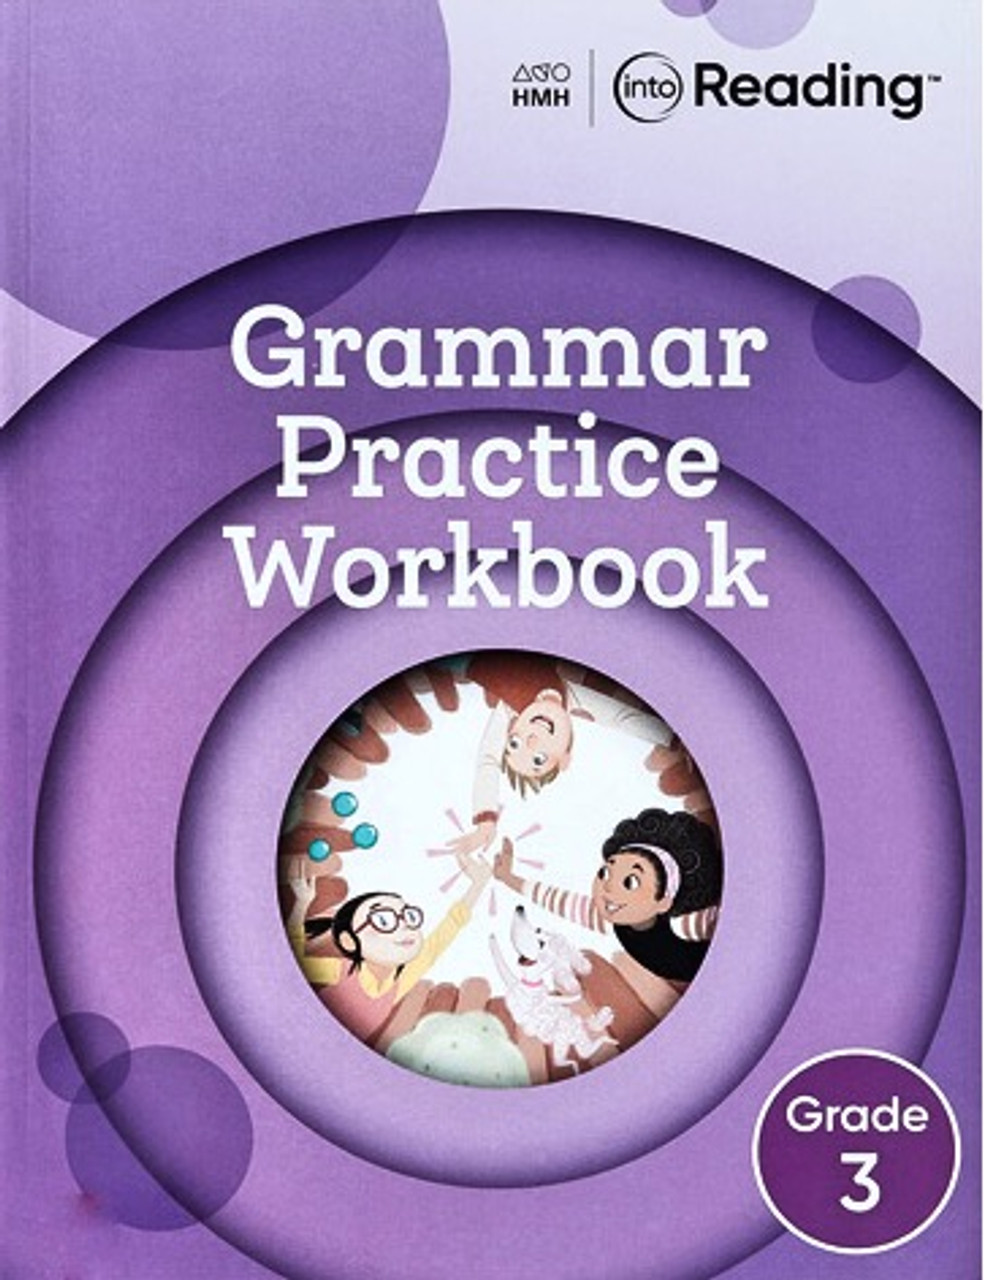 Workbook　Practice　Grammar　Reading　Into　Grade